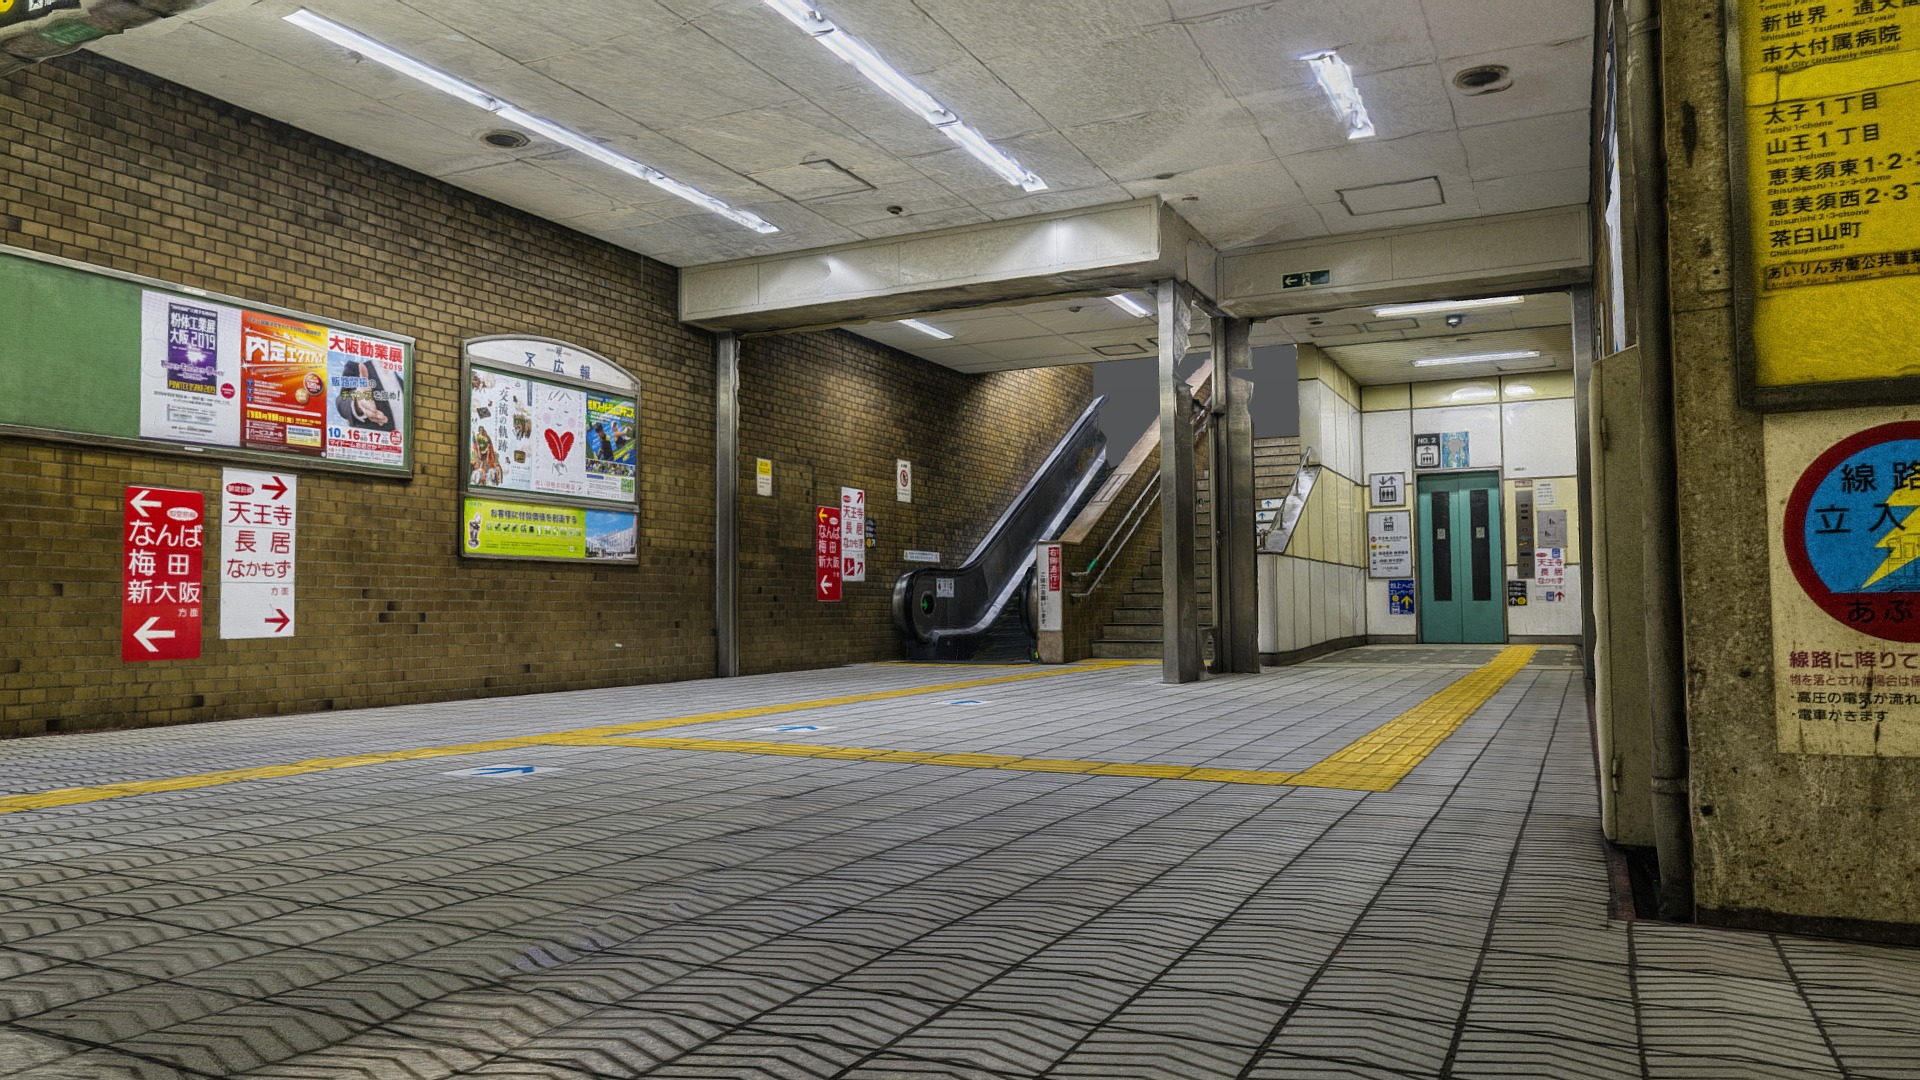 3D model Osaka Subway station photogrammetry raw scan - This is a 3D model of the Osaka Subway station photogrammetry raw scan. The 3D model is about a subway station with signs.